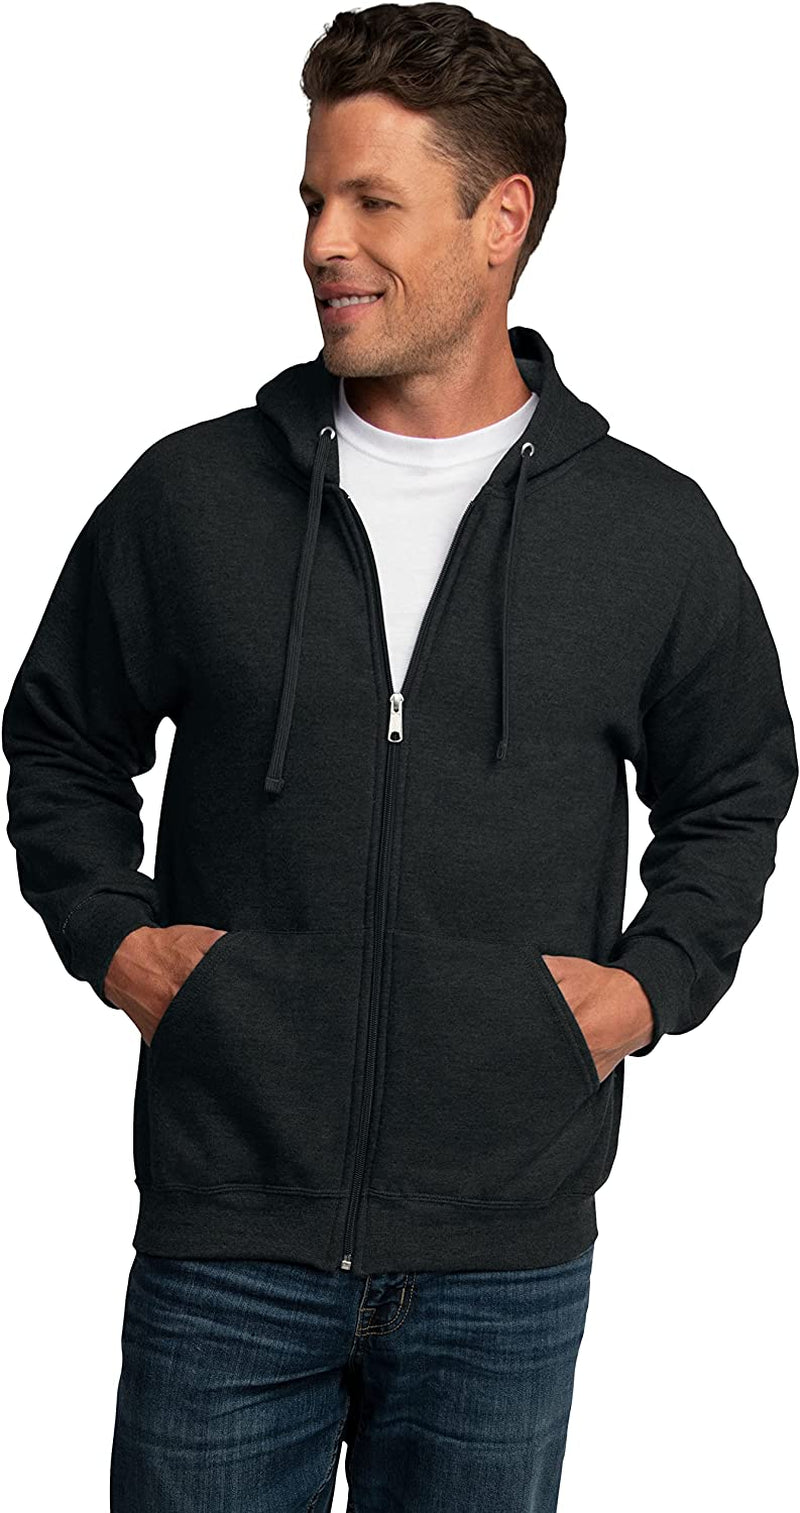 Men'S Eversoft Fleece Sweatshirts & Hoodies, Moisture Wicking & Breathable, Sizes S-4X